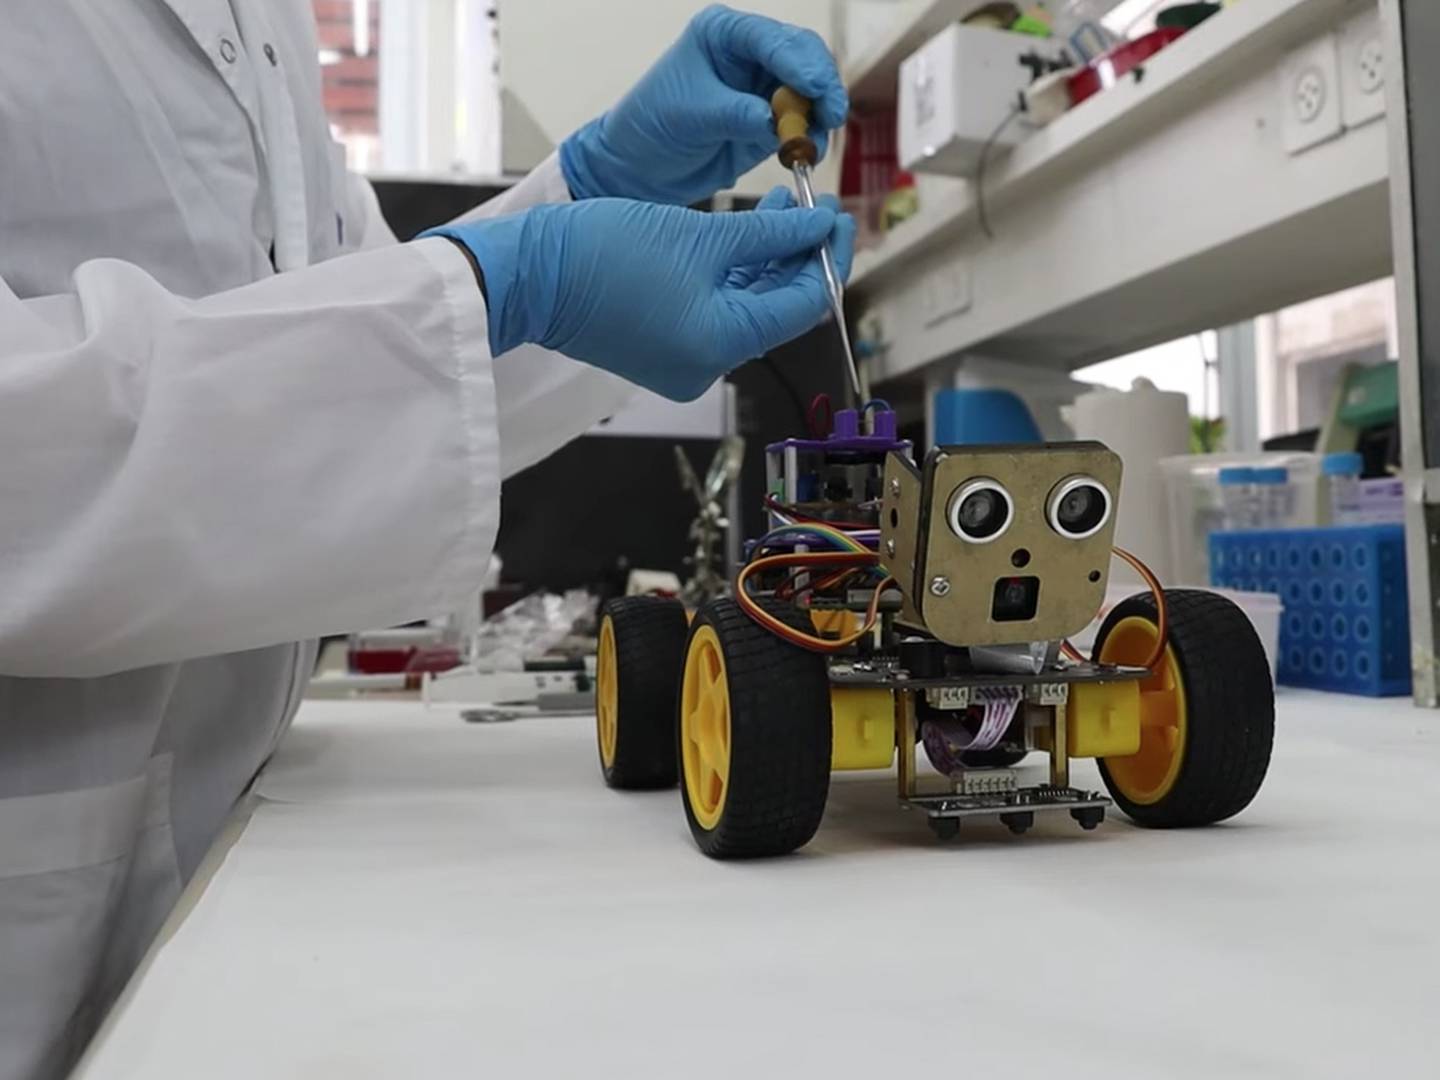 Así es Keyper, el 'perro robot' made in Spain que detecta fugas de gases